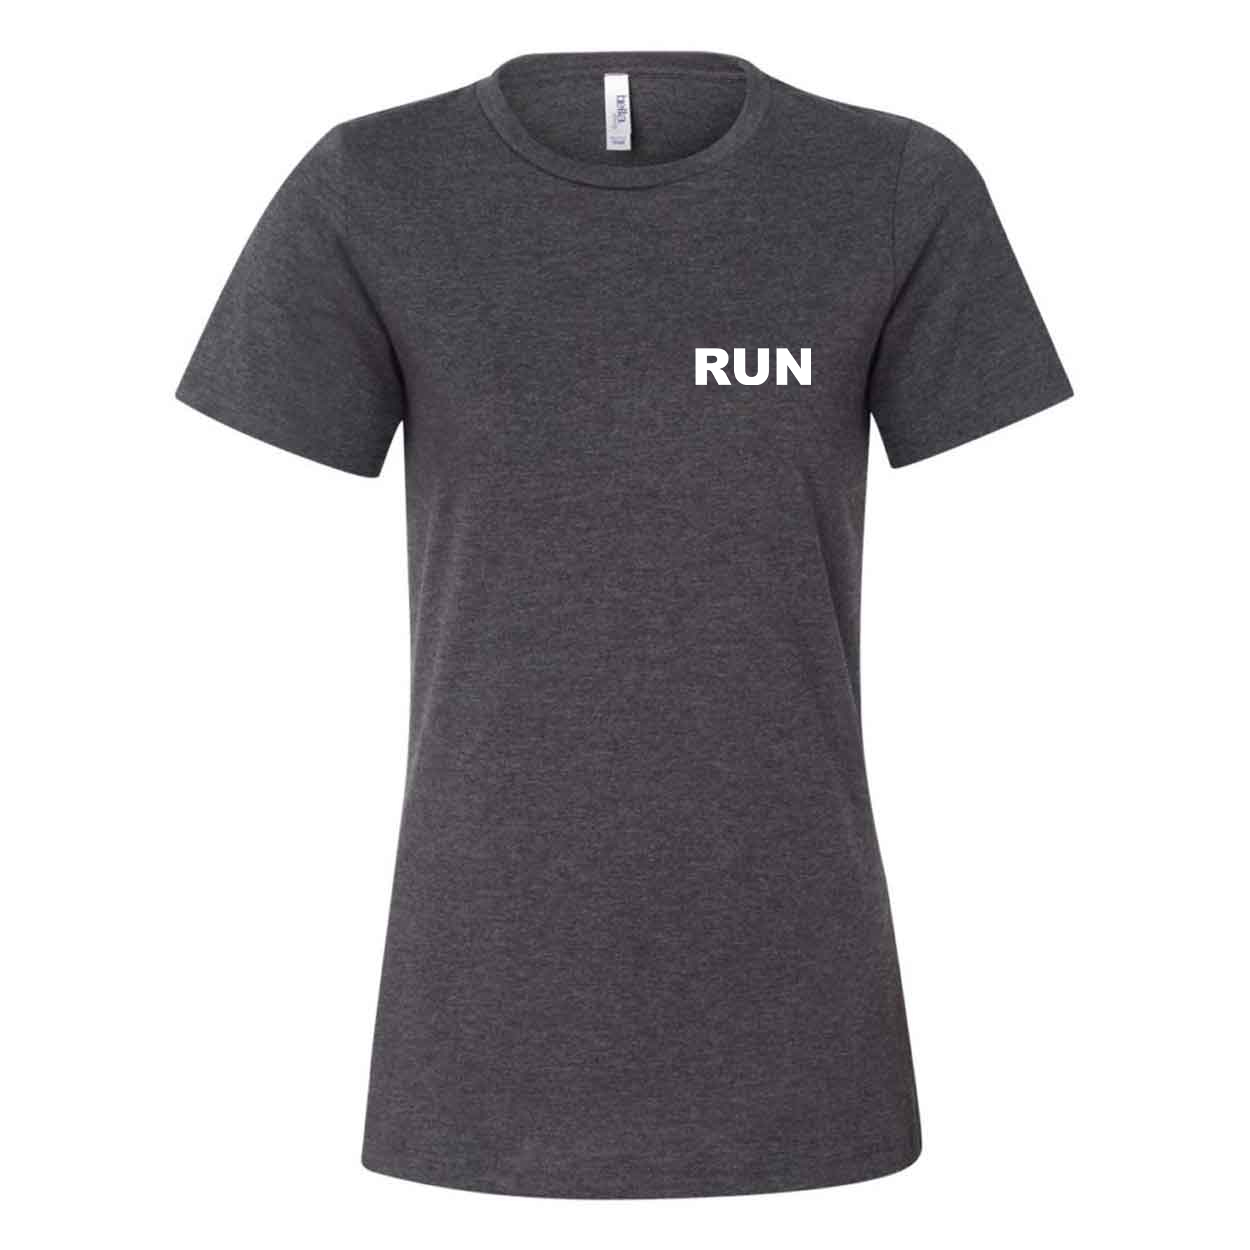 Run Brand Logo Women's Night Out Relaxed Jersey T-Shirt Dark Gray Heather